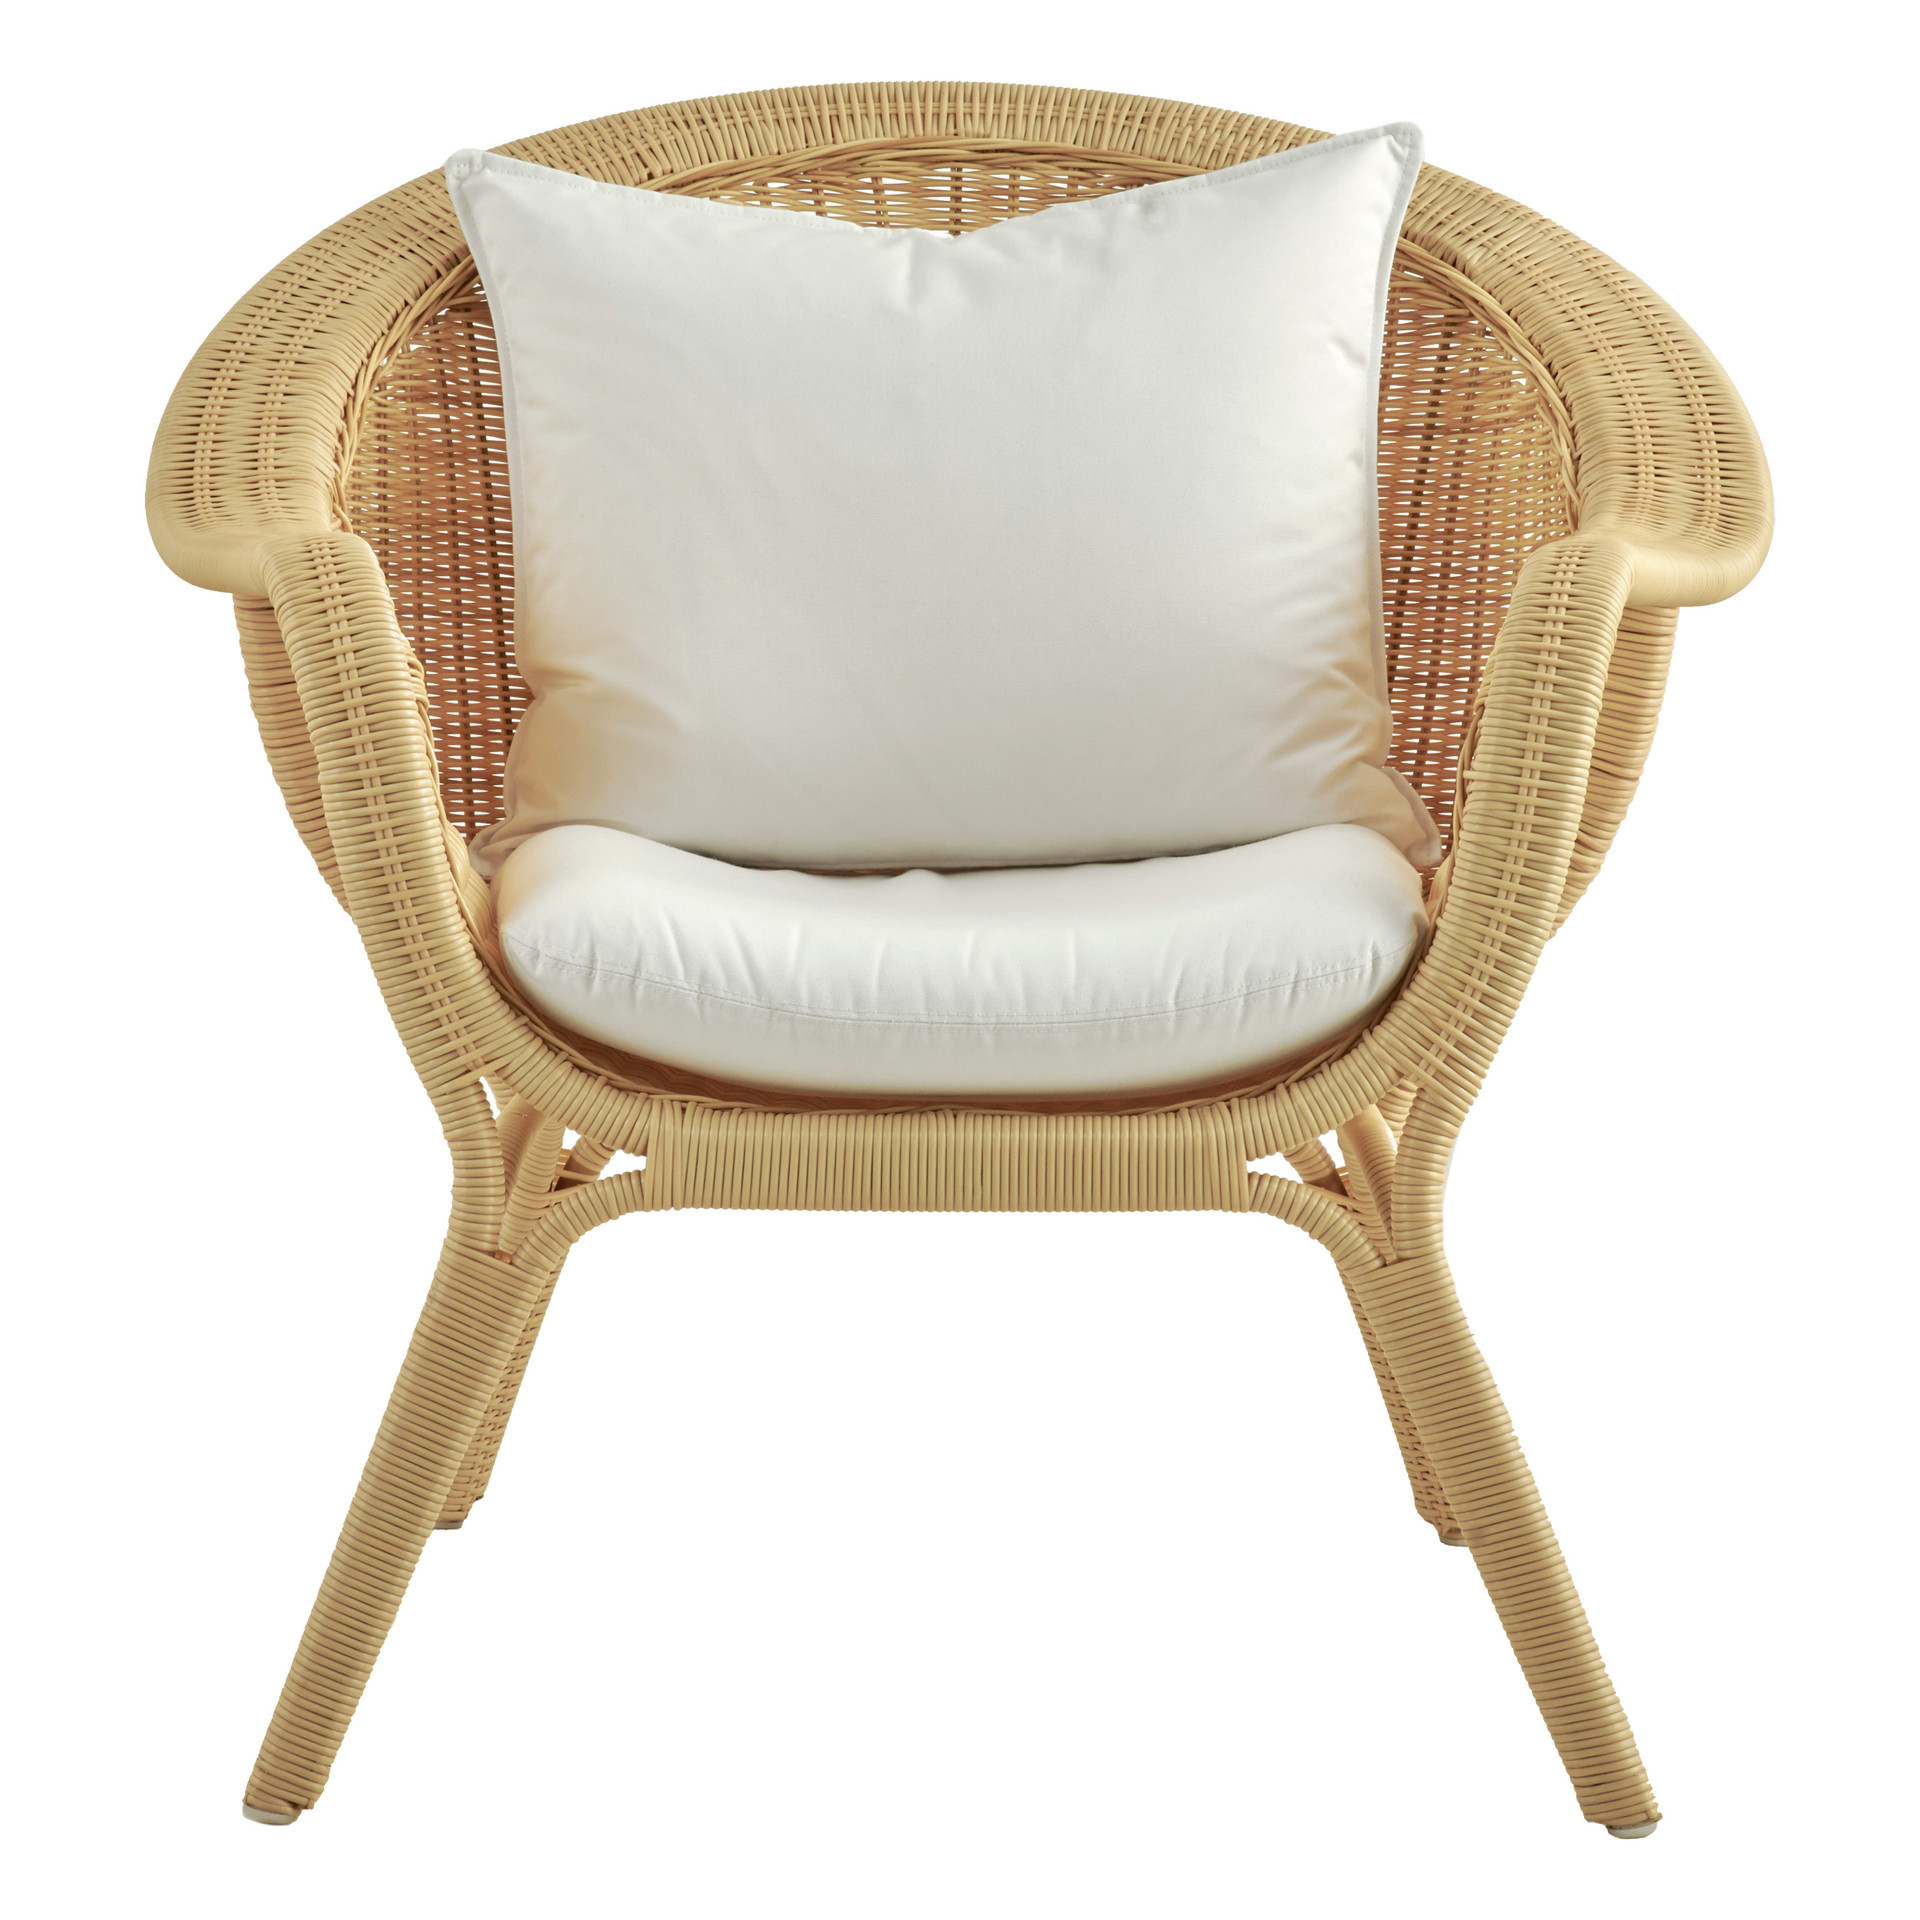 Sika Design Nanna Ditzel Madame Chair Exterior - Outdoor Patio Chair